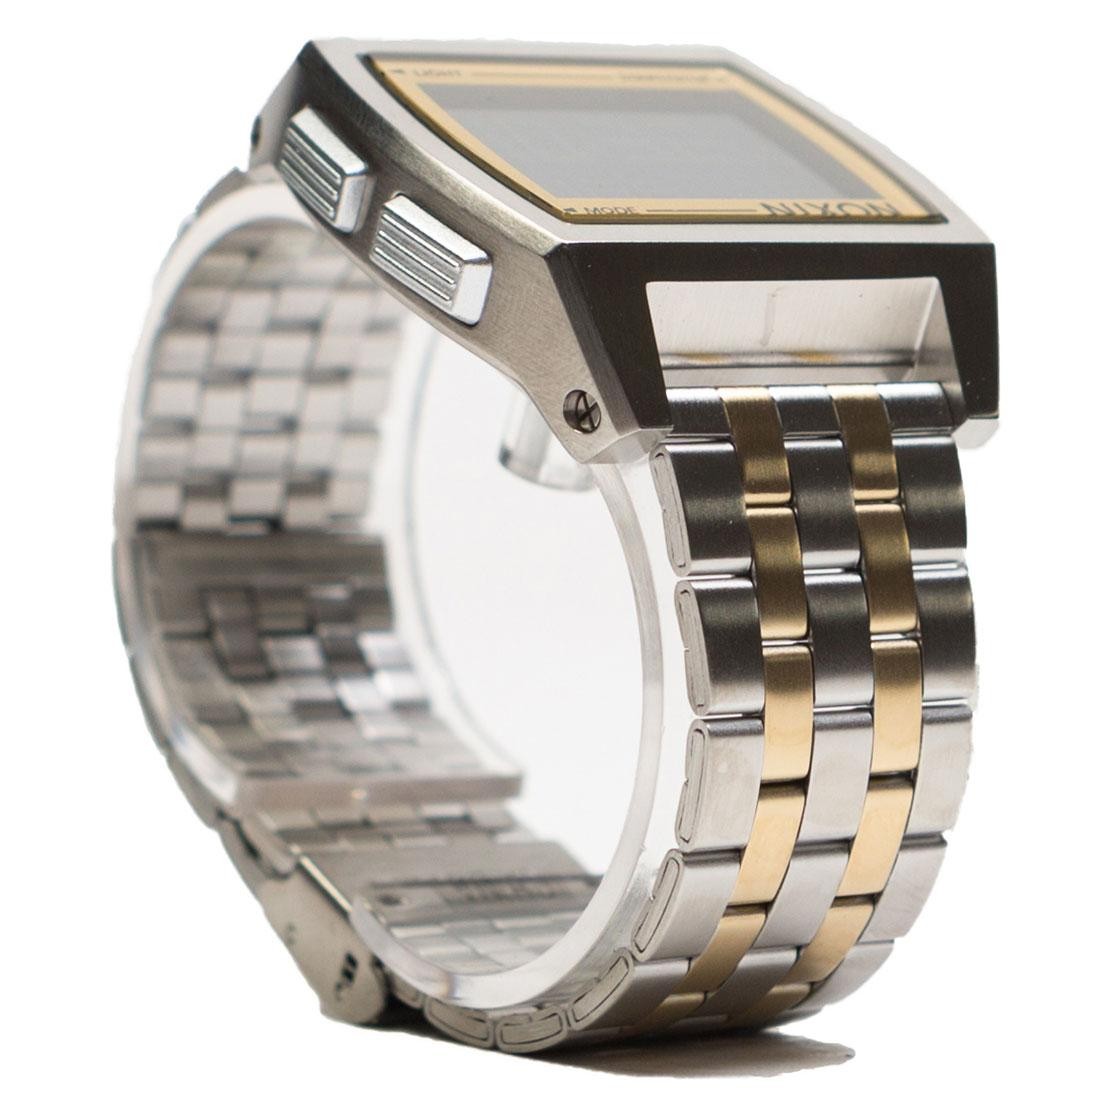 Nixon Base Watch (silver / light gold)